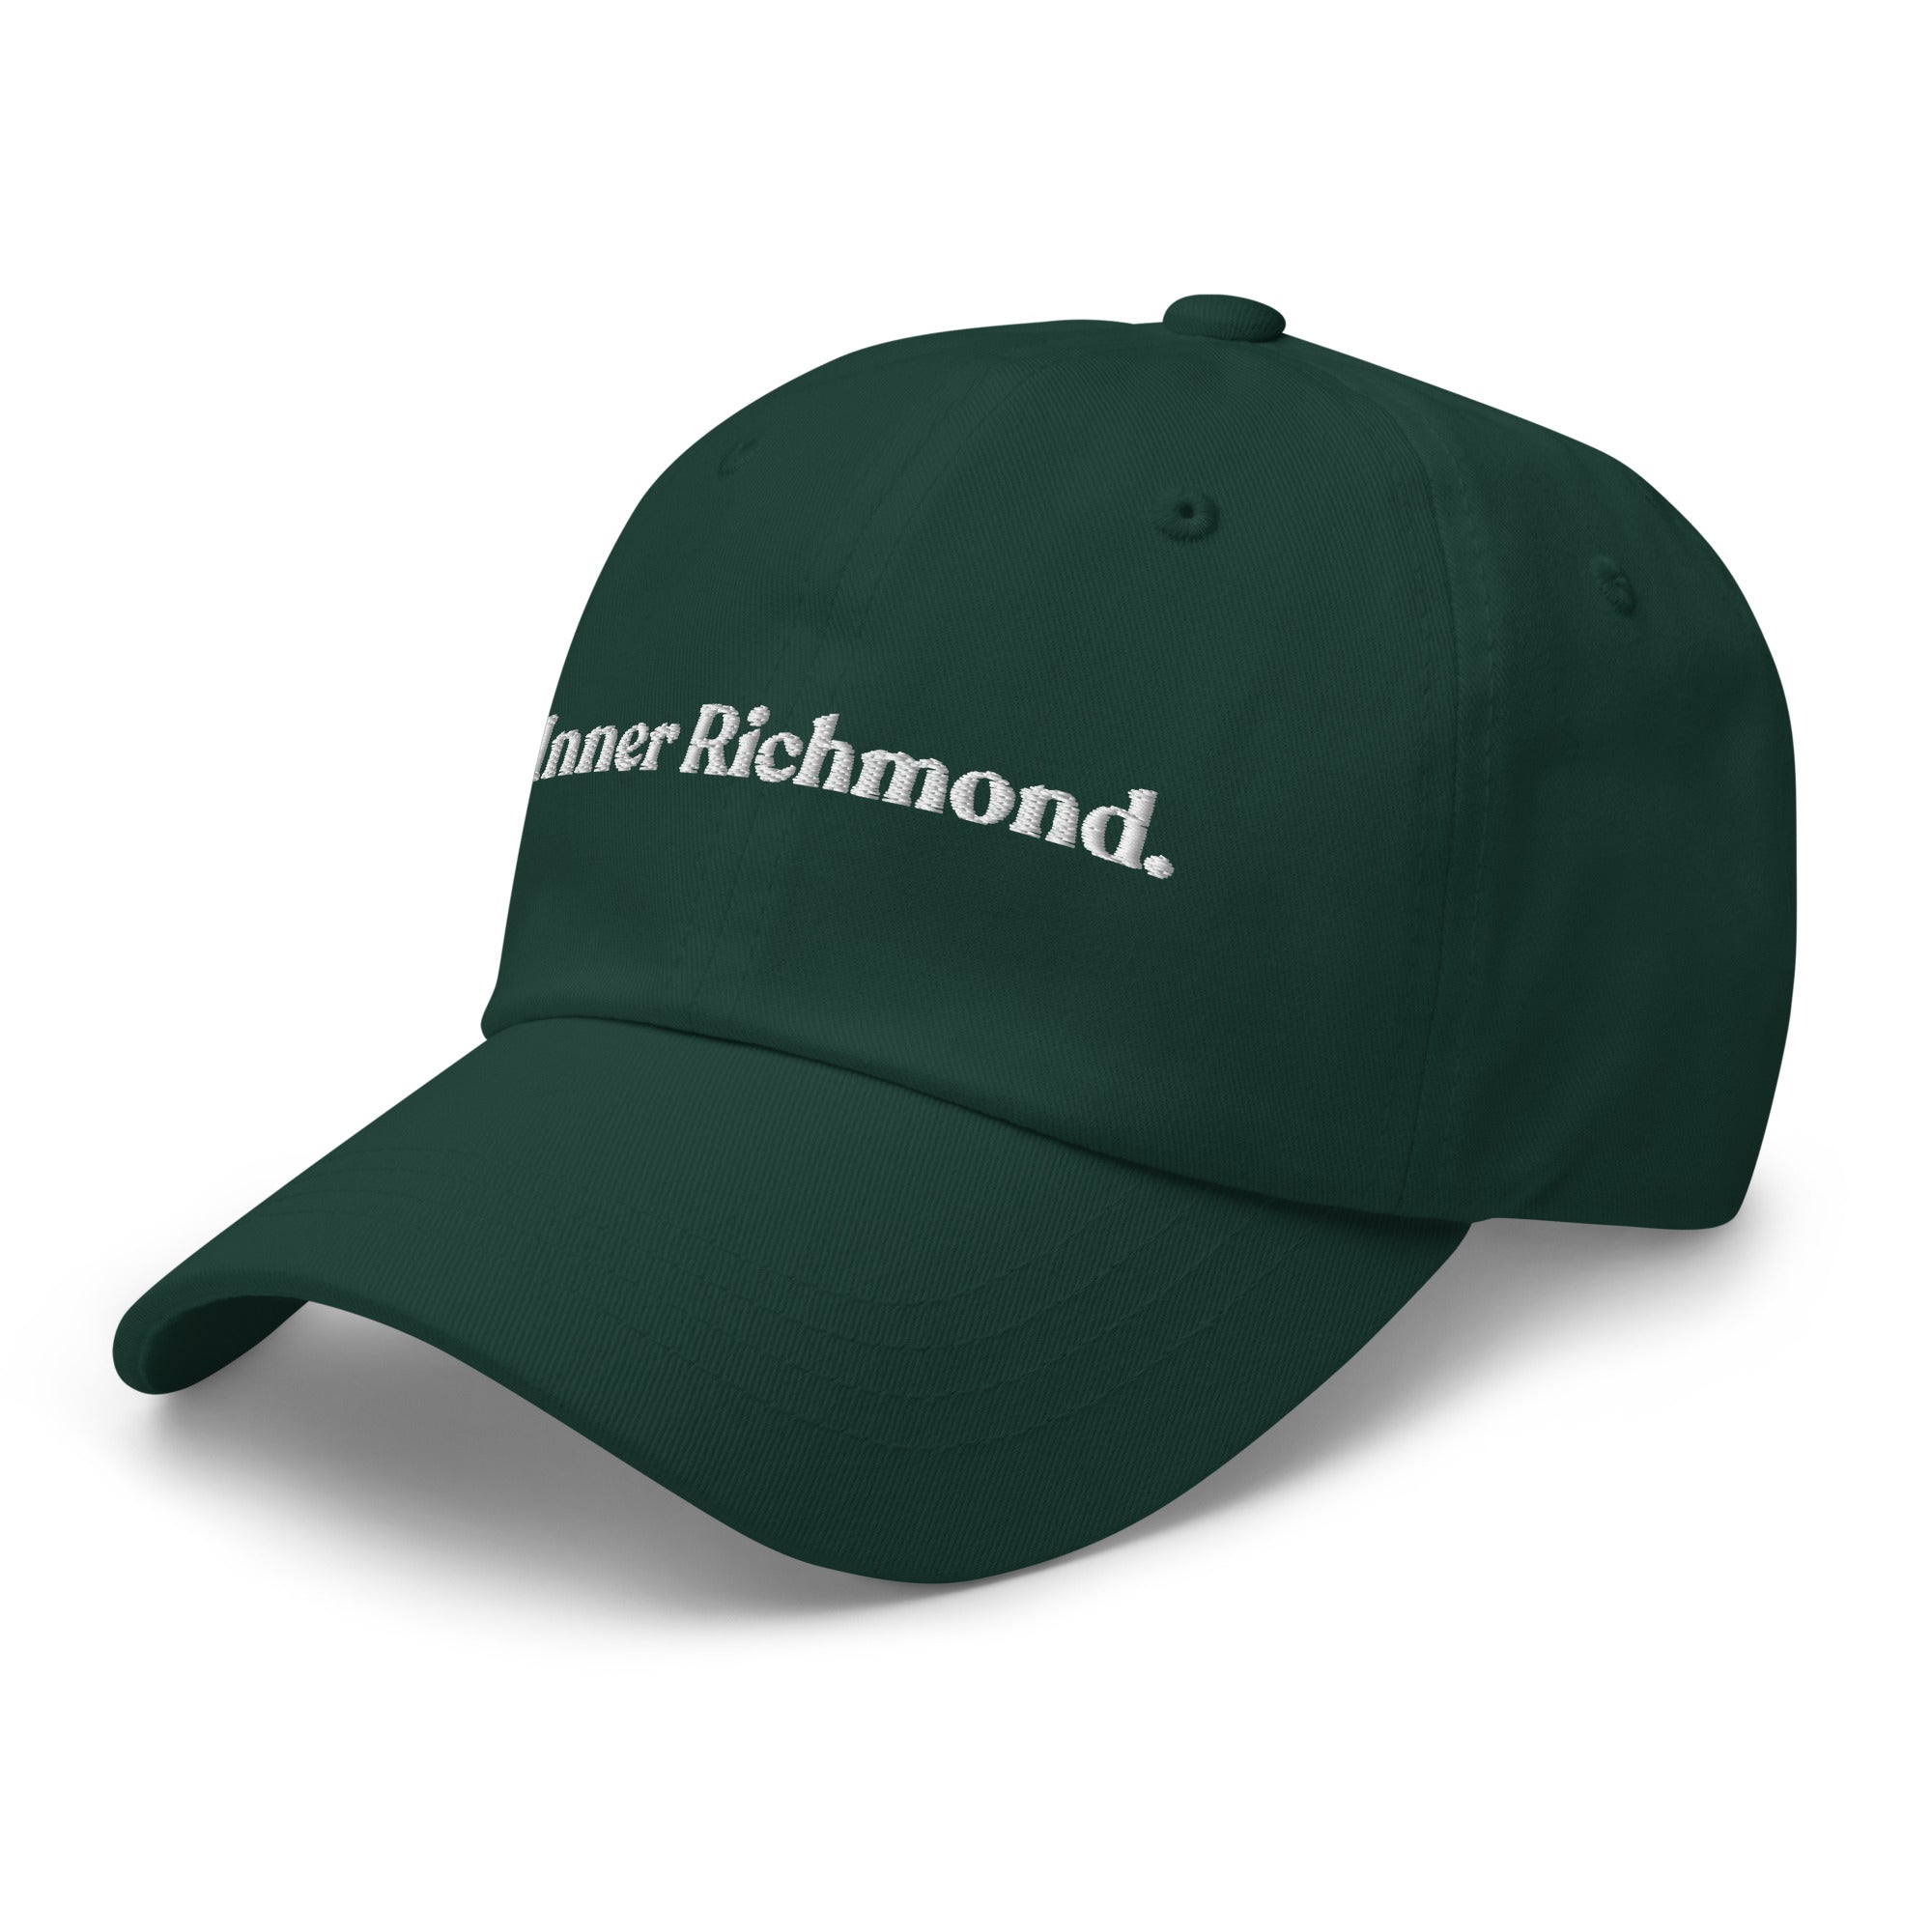 Classic Dad Hat - Inner Richmond | San Francisco, CA